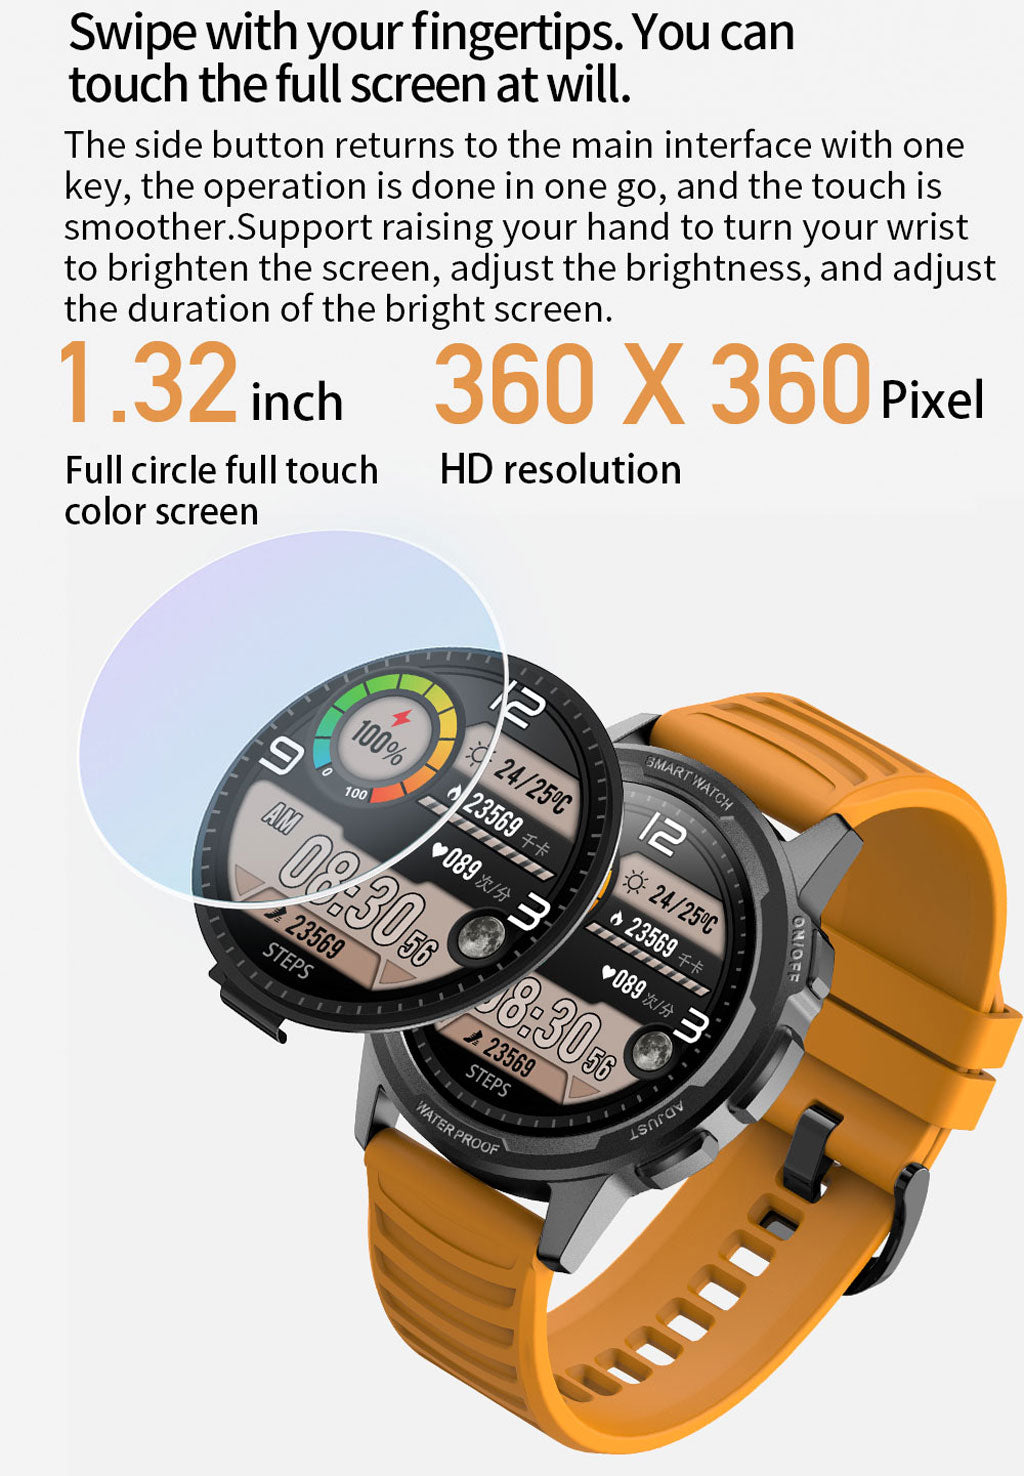 Viedefit-Rock-1-Smart-Watch-1.32-big-screen